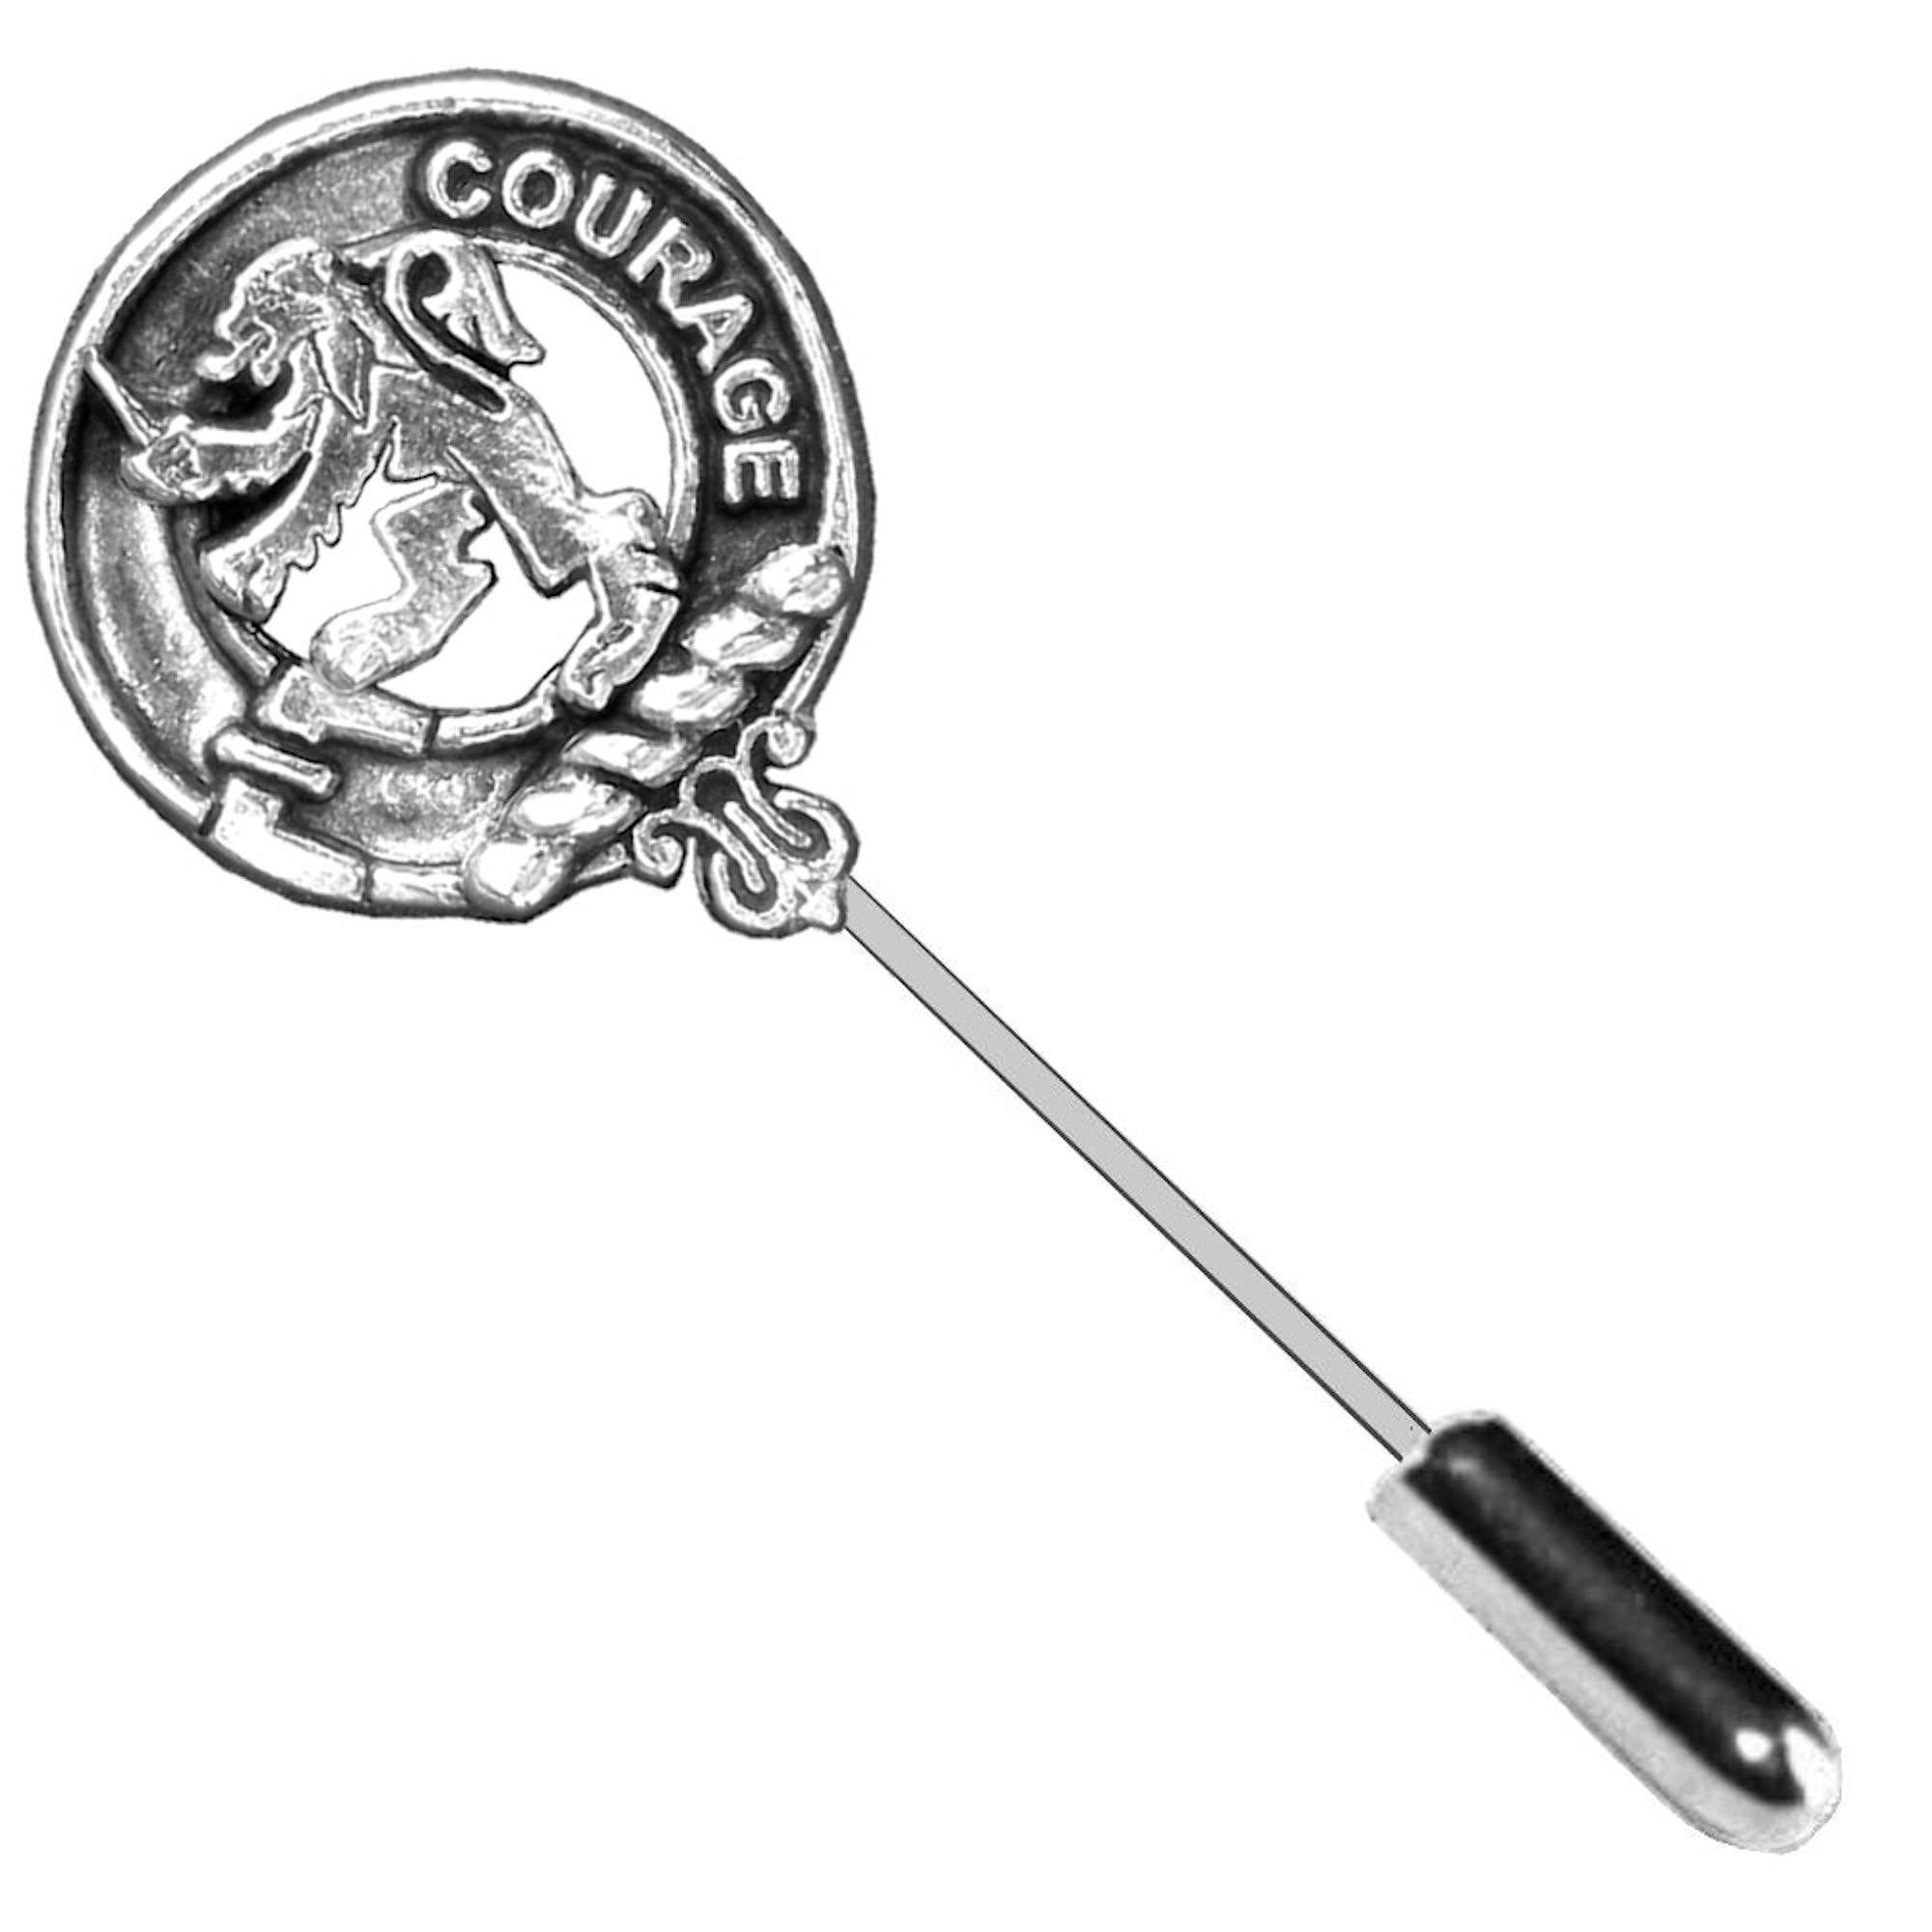 Cumming Clan Crest Stick or Cravat pin, Sterling Silver